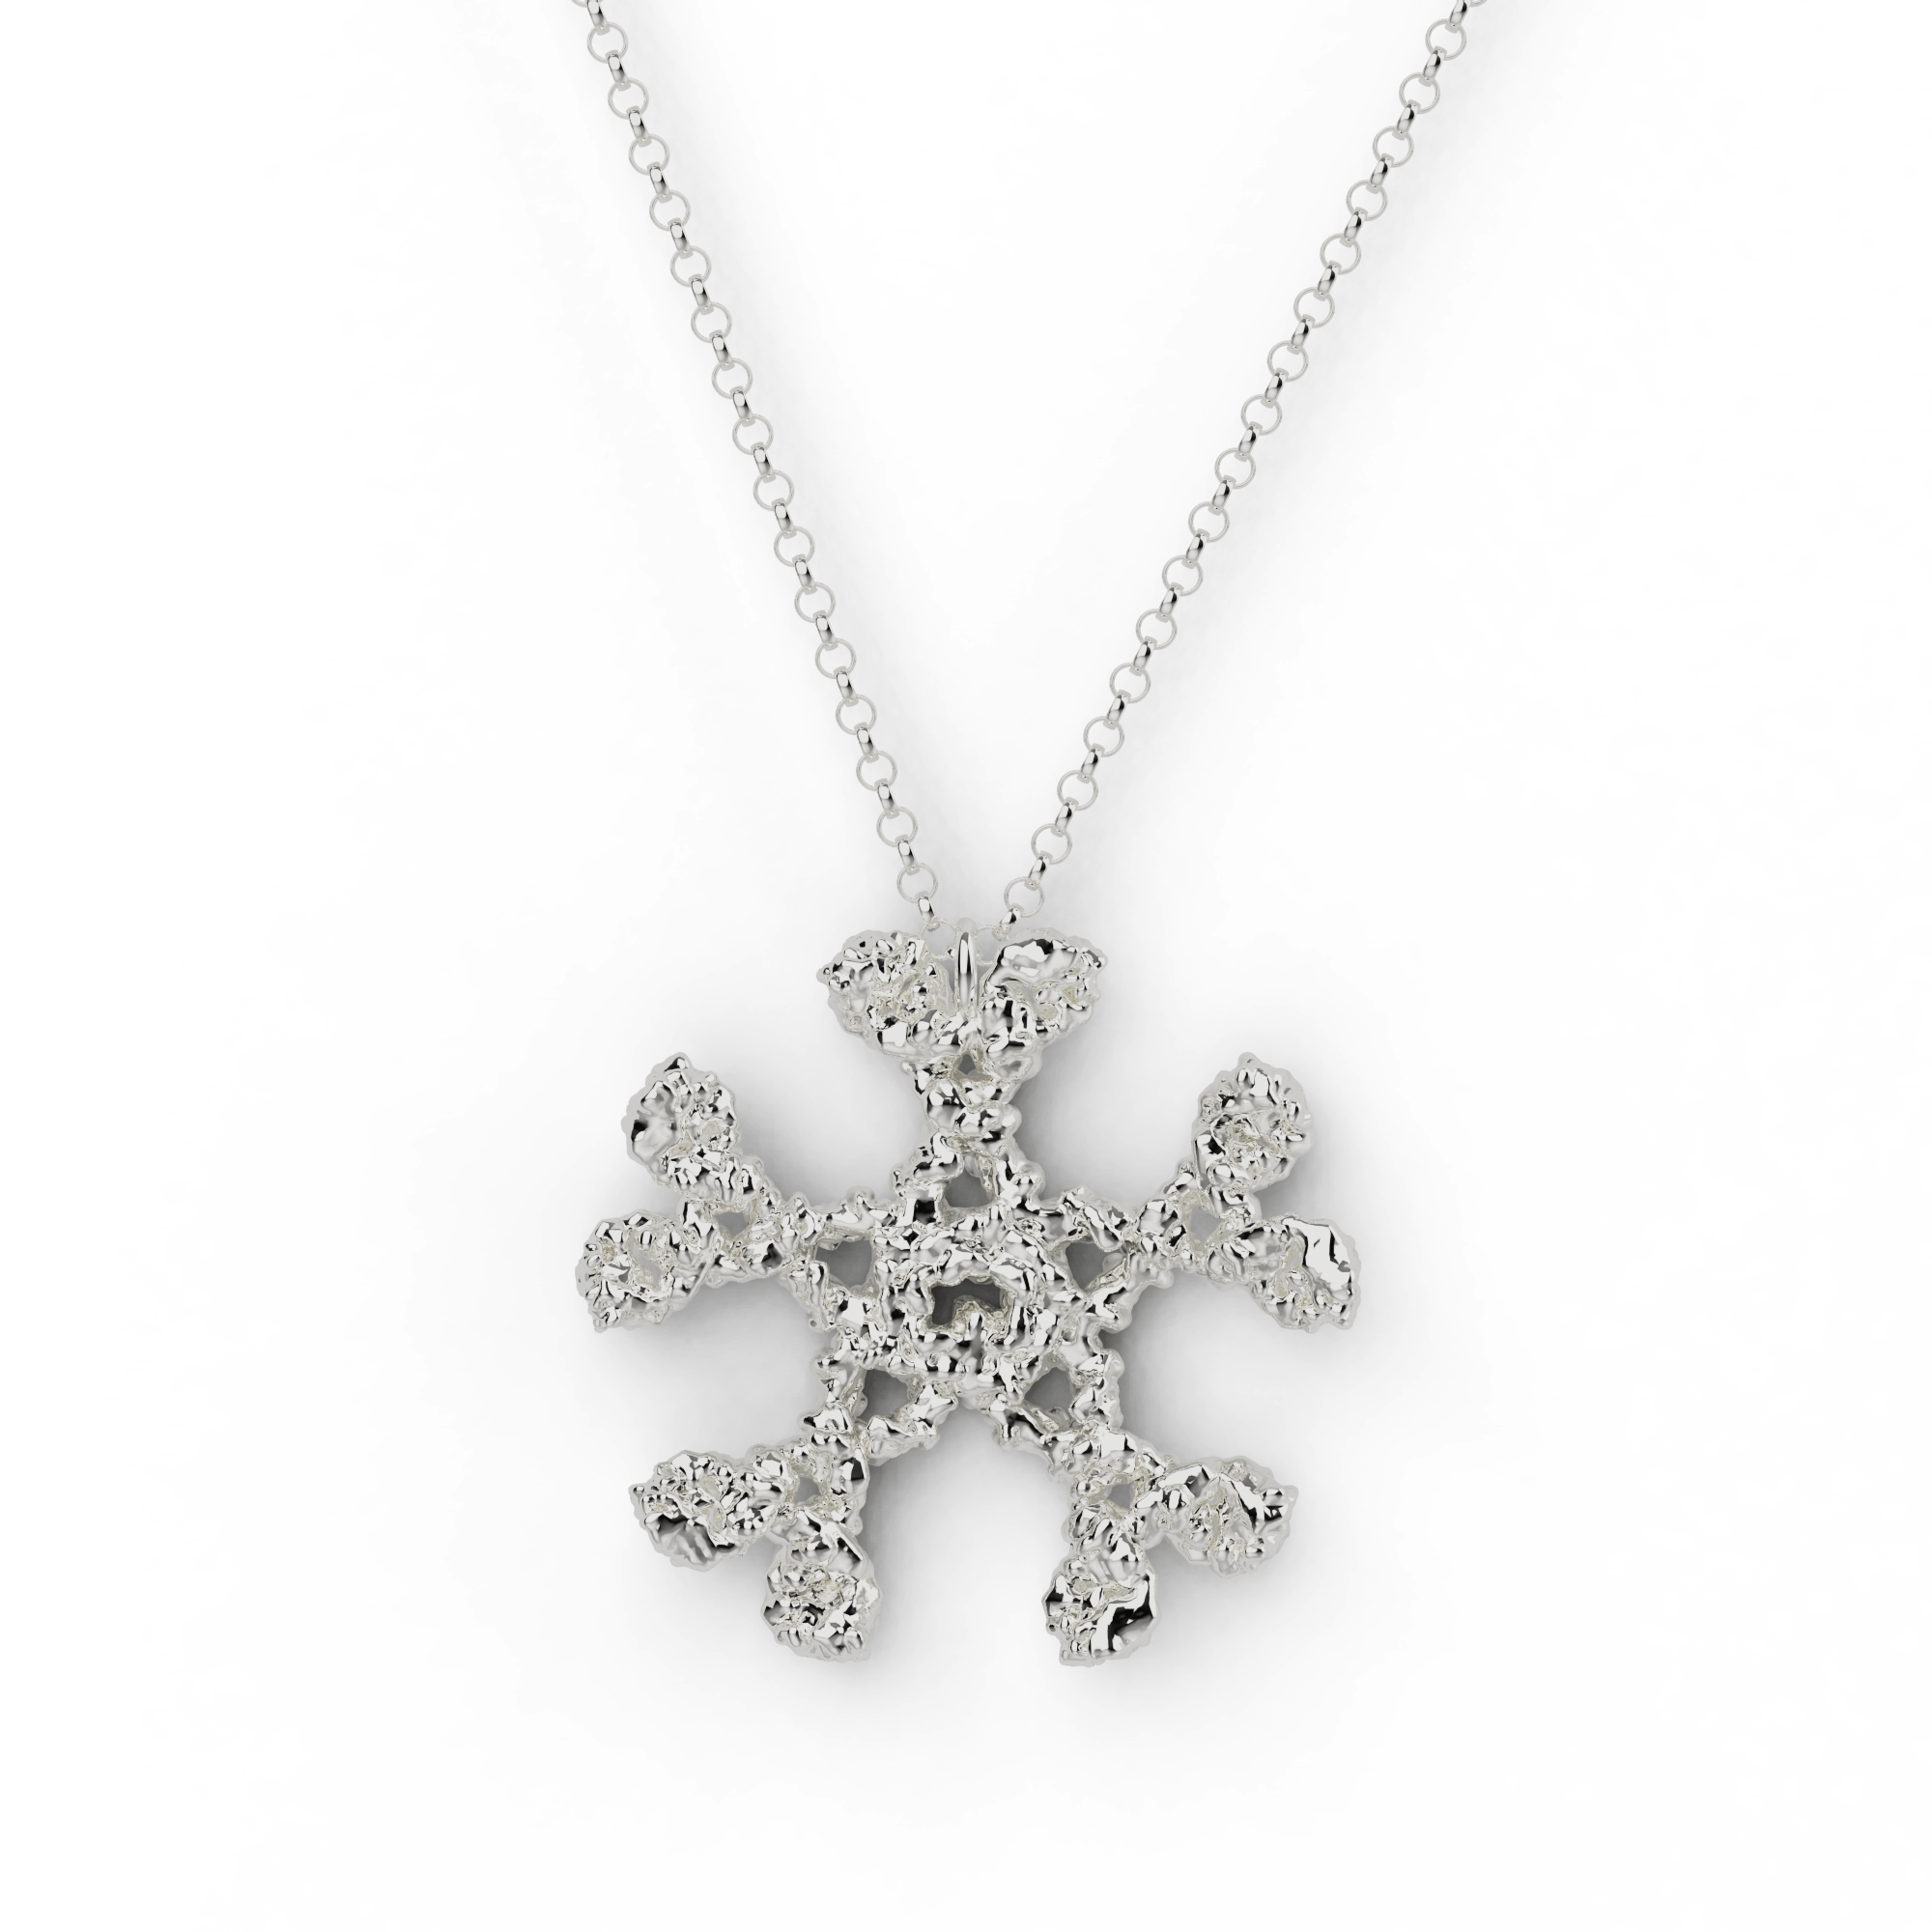 IgM necklace | silver